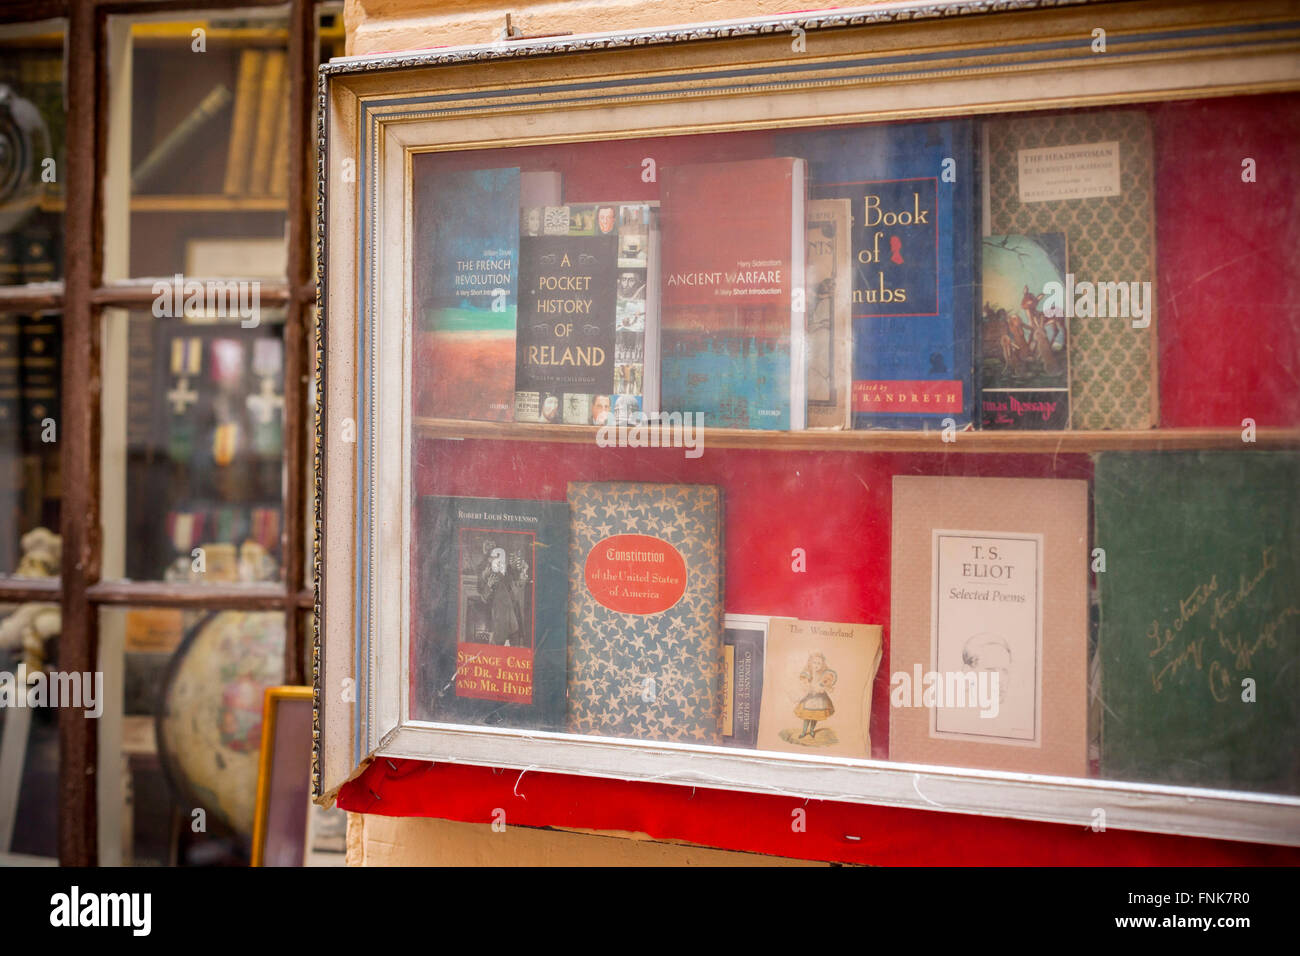 Display book store libri in inglese.Palma de Maiorca, isole Baleari, Spagna. Foto Stock